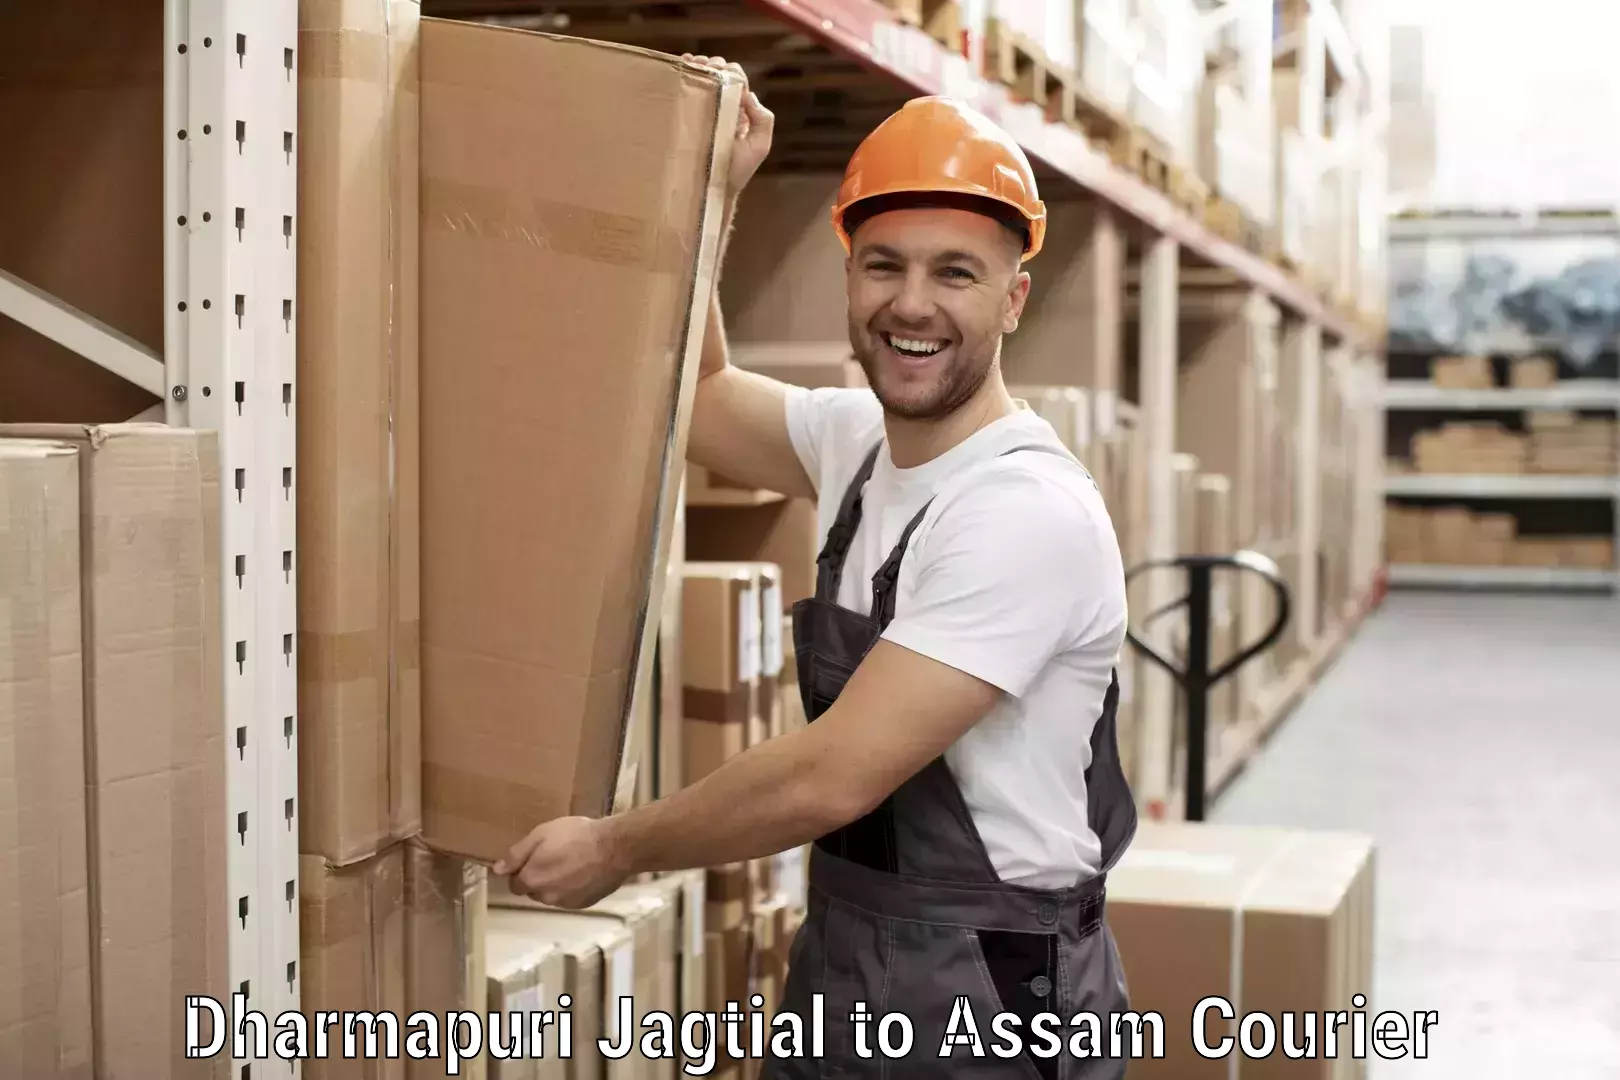 Advanced package delivery Dharmapuri Jagtial to Assam